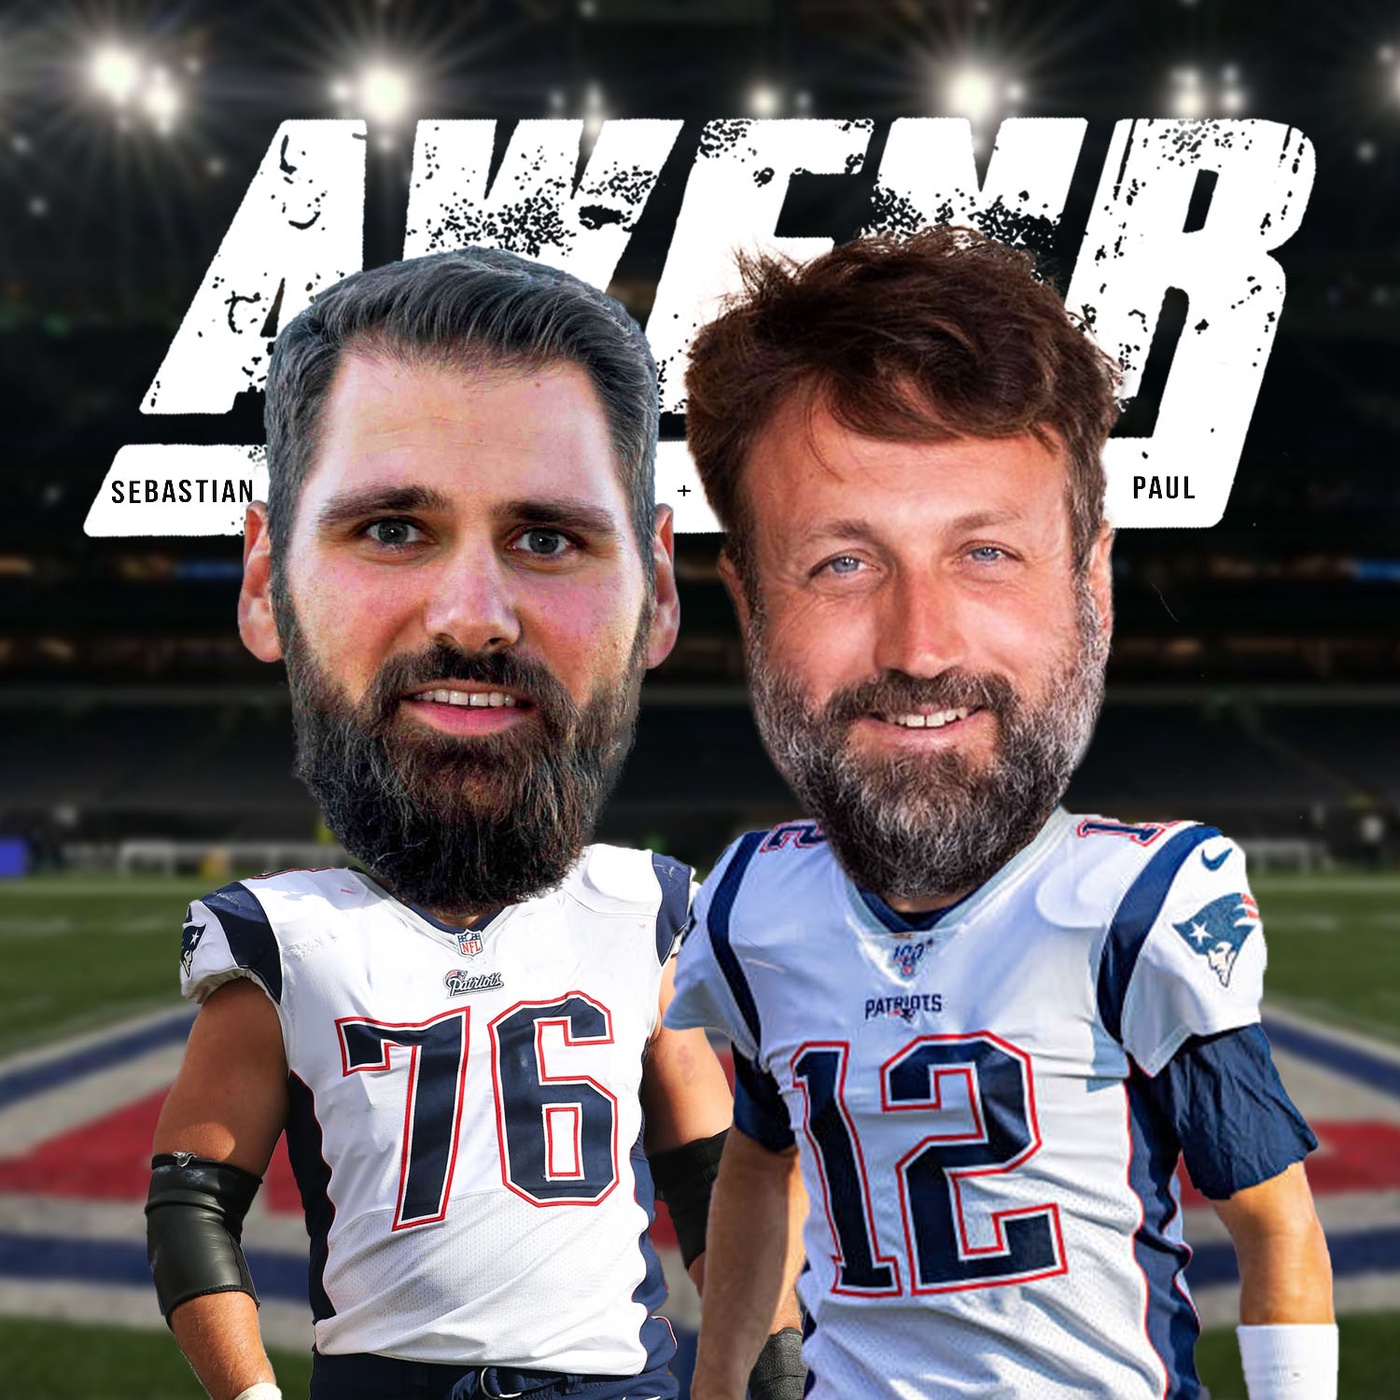 AWFNR #456 - SEBASTIAN VOLLMER & PAUL - 7 Super Bowl Ringe